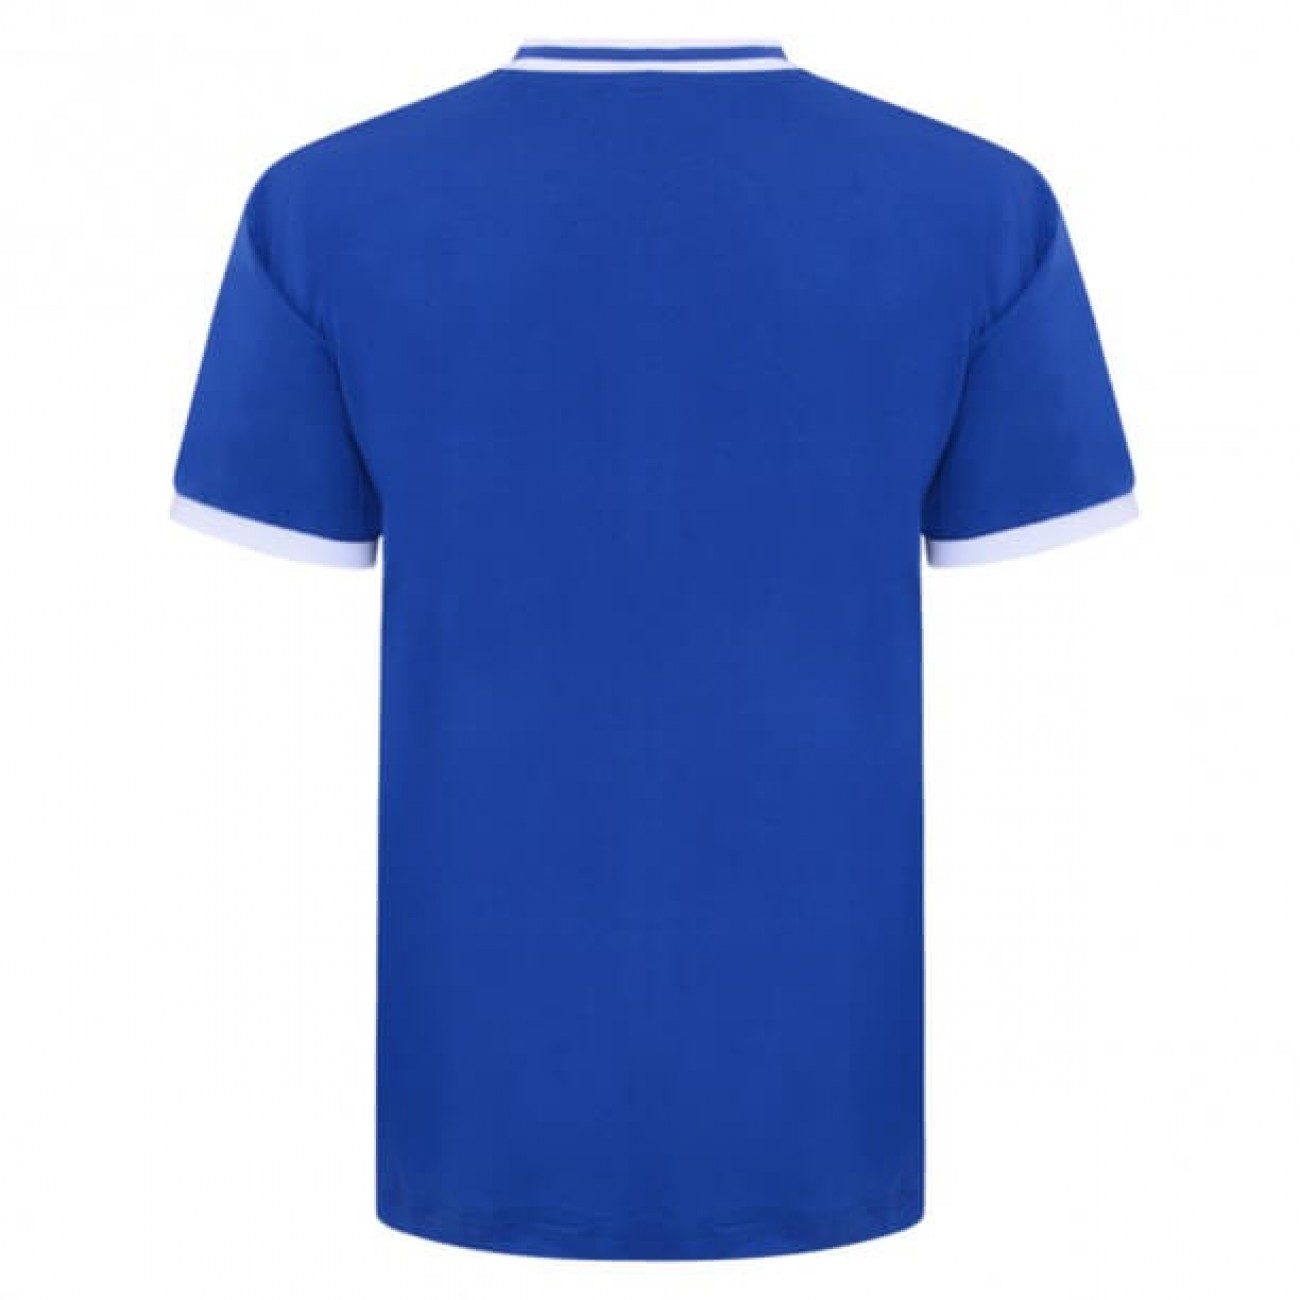 Mens Navy Chelsea Retro Tipping Detail Ringer Training Football T-Shirt Top 